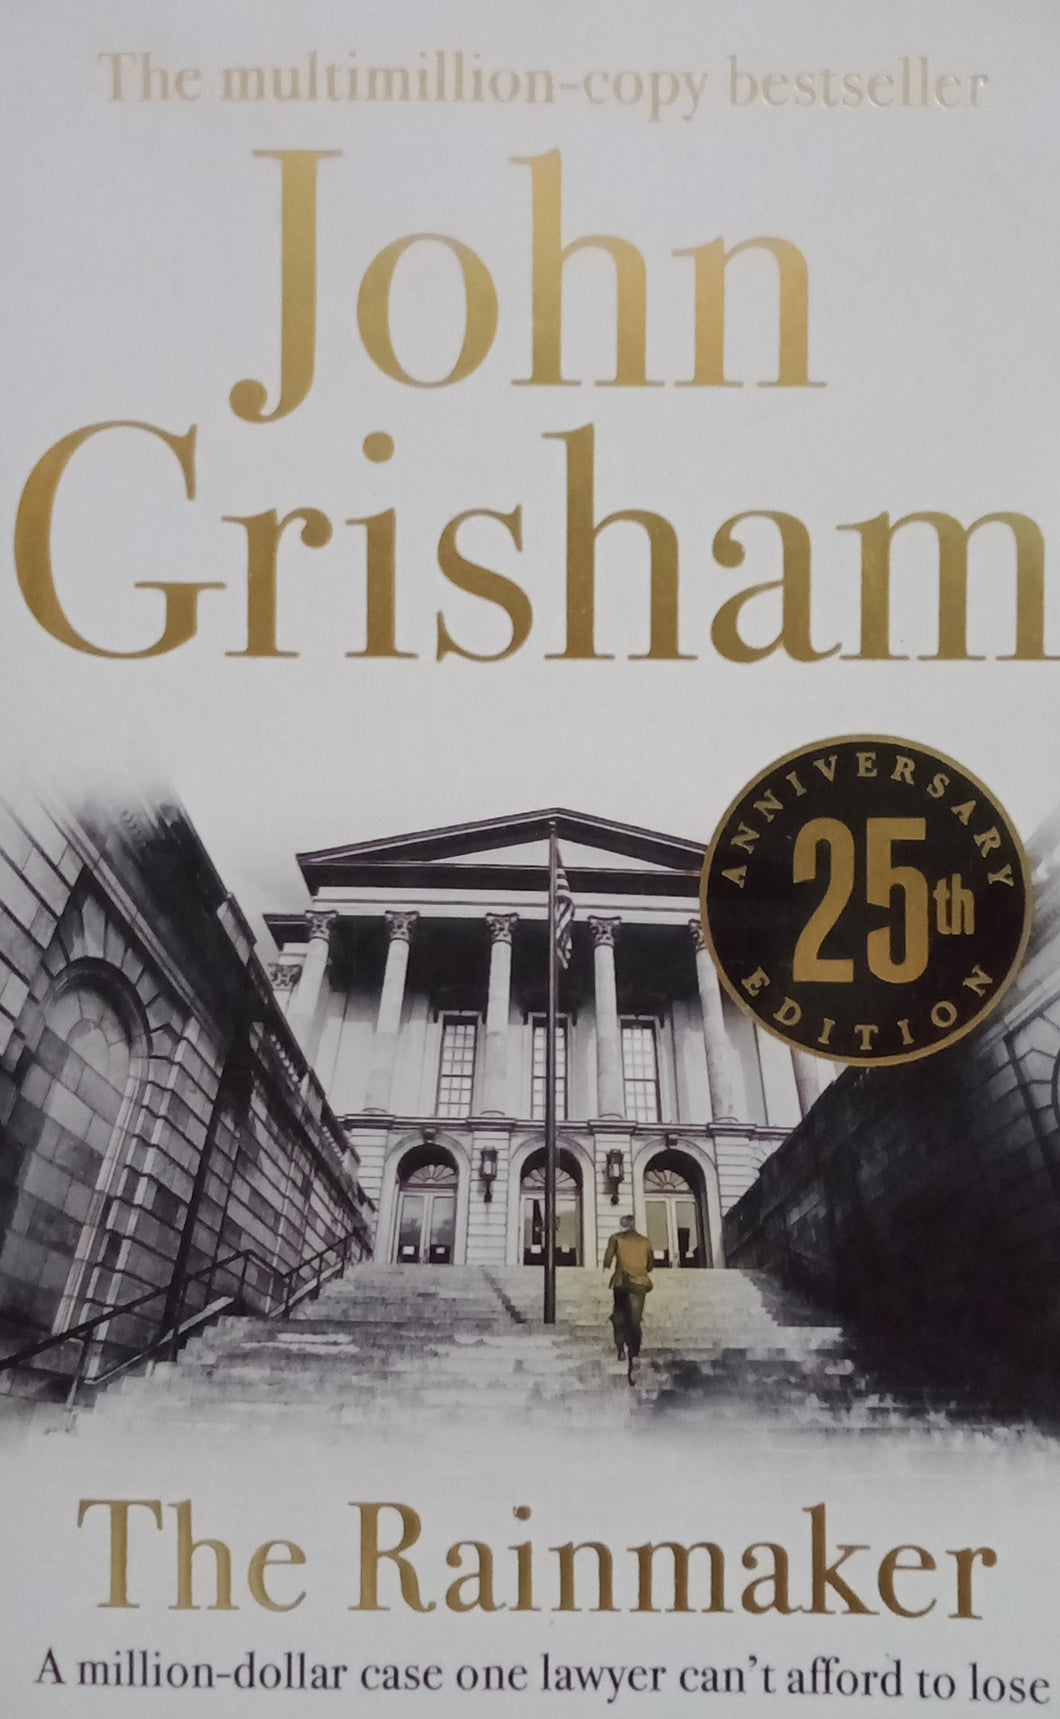 The Rainmaker by John Grisham